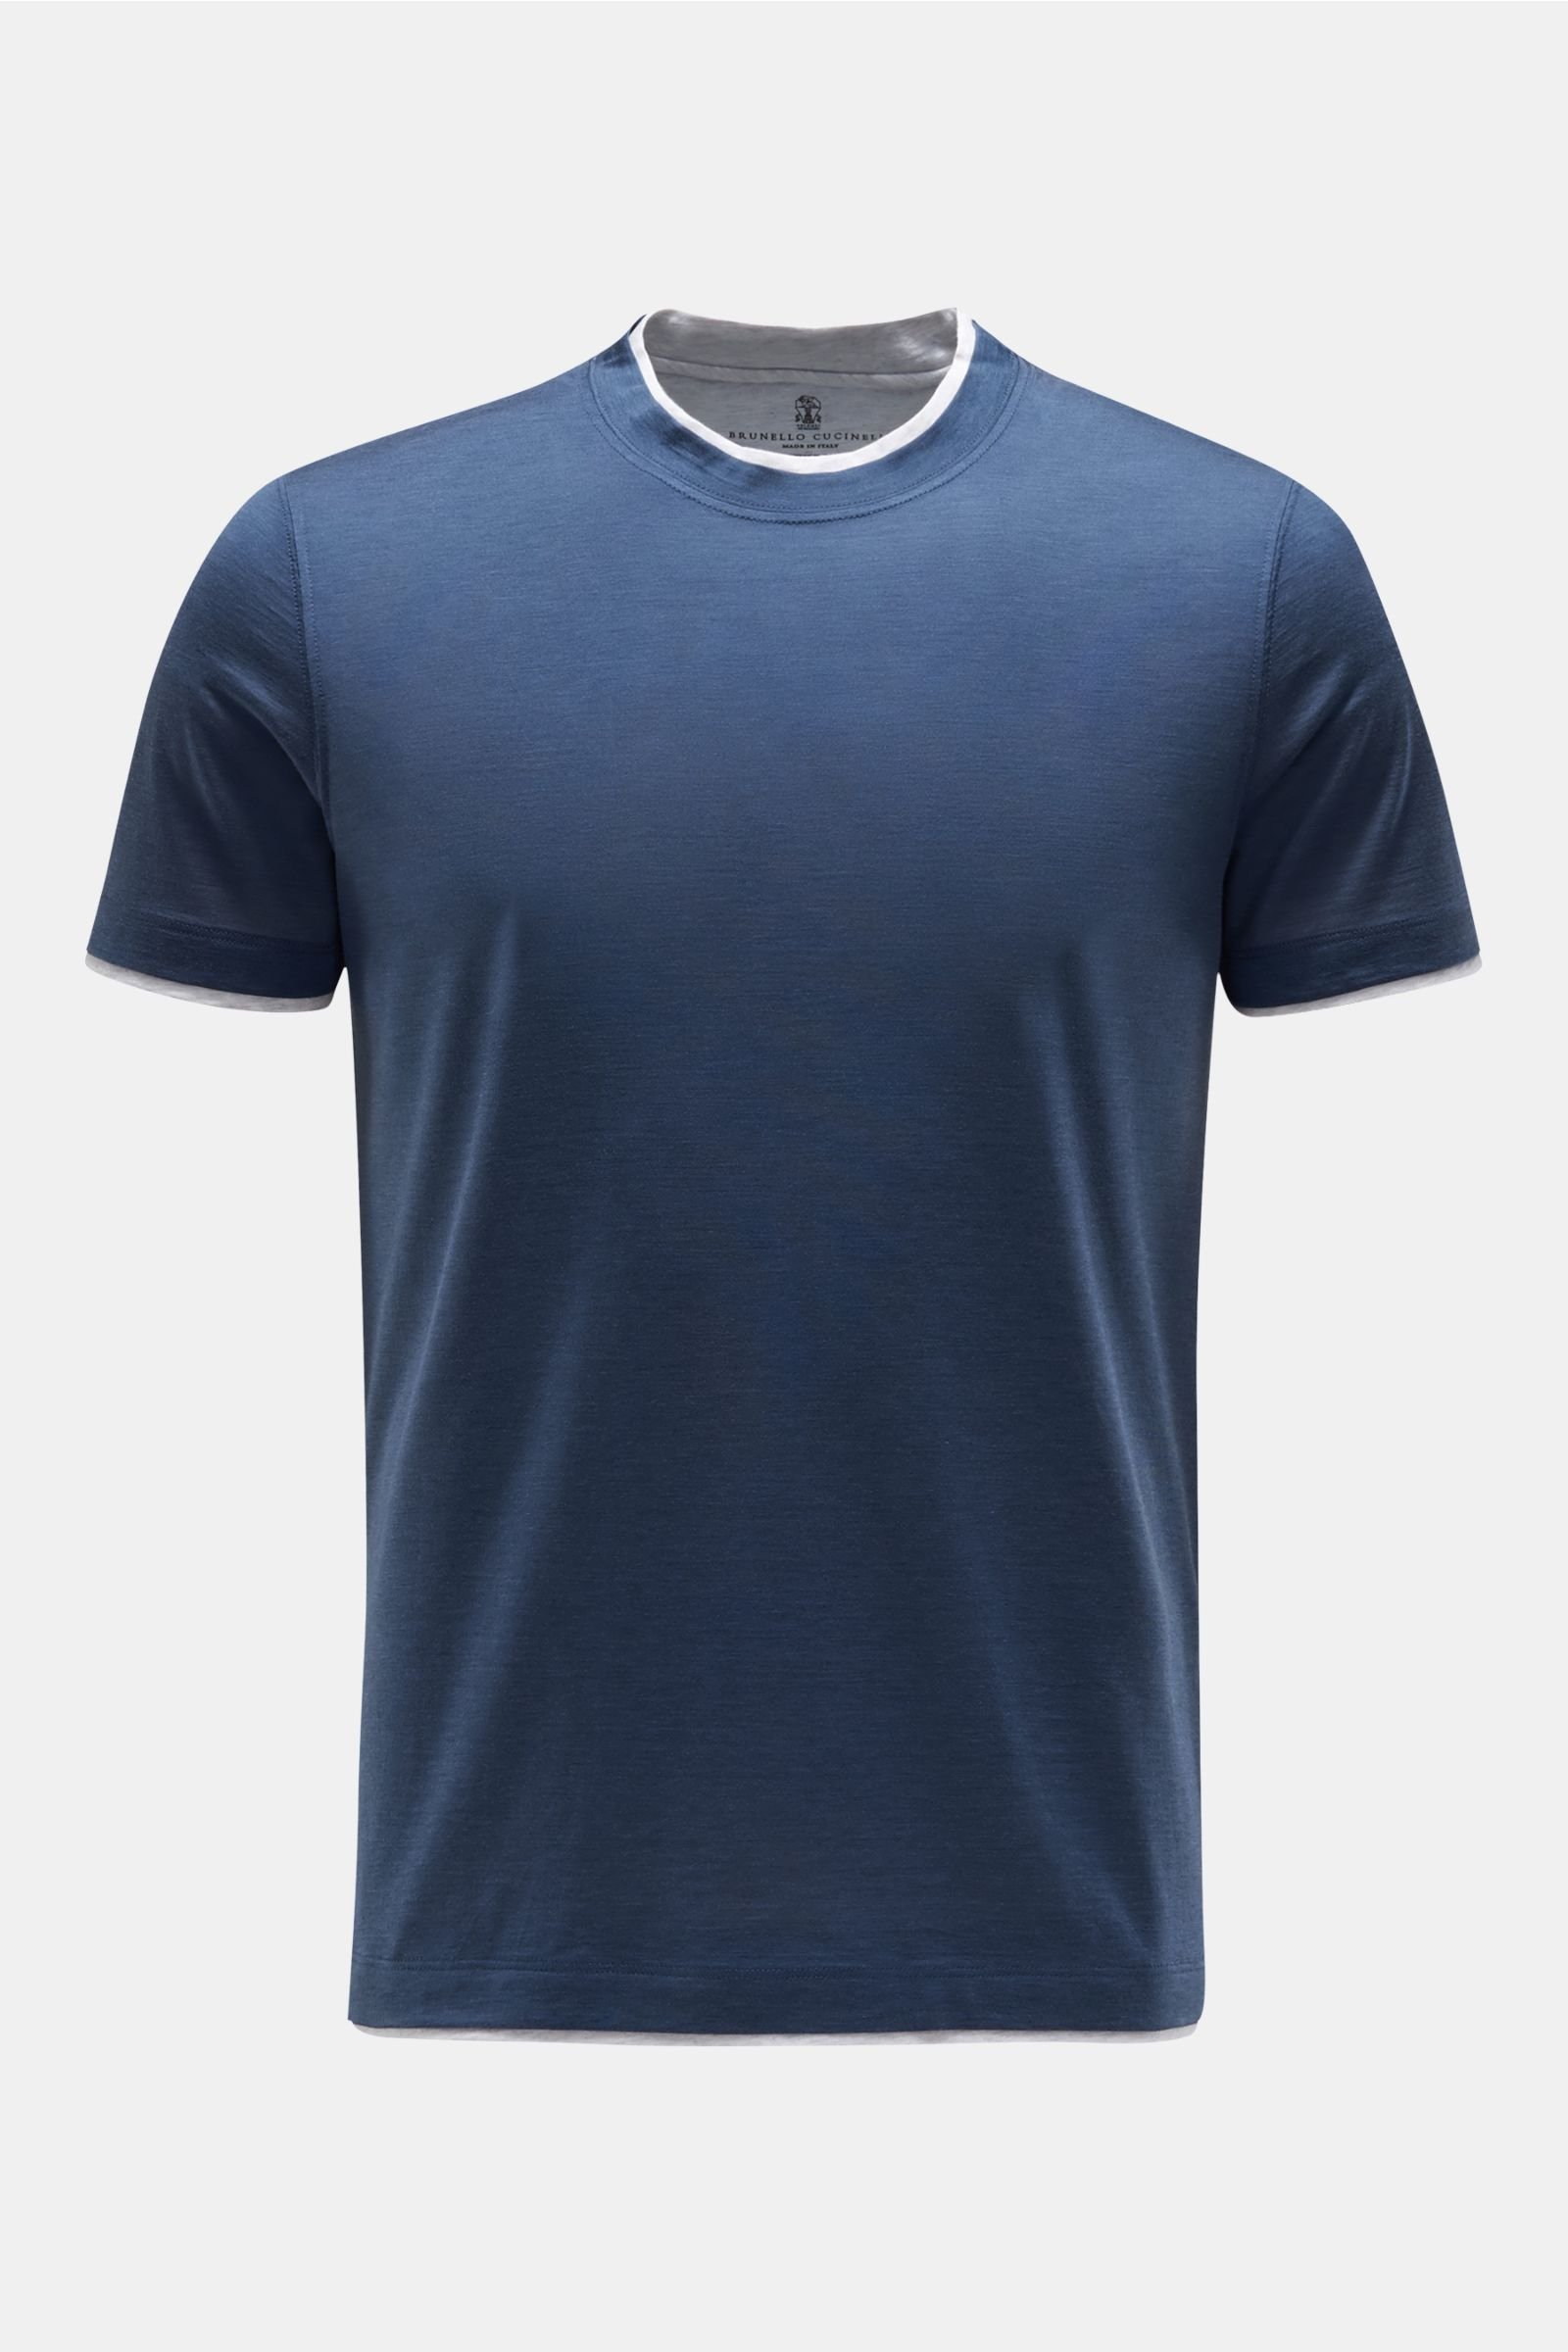 Crew neck T-shirt grey-blue